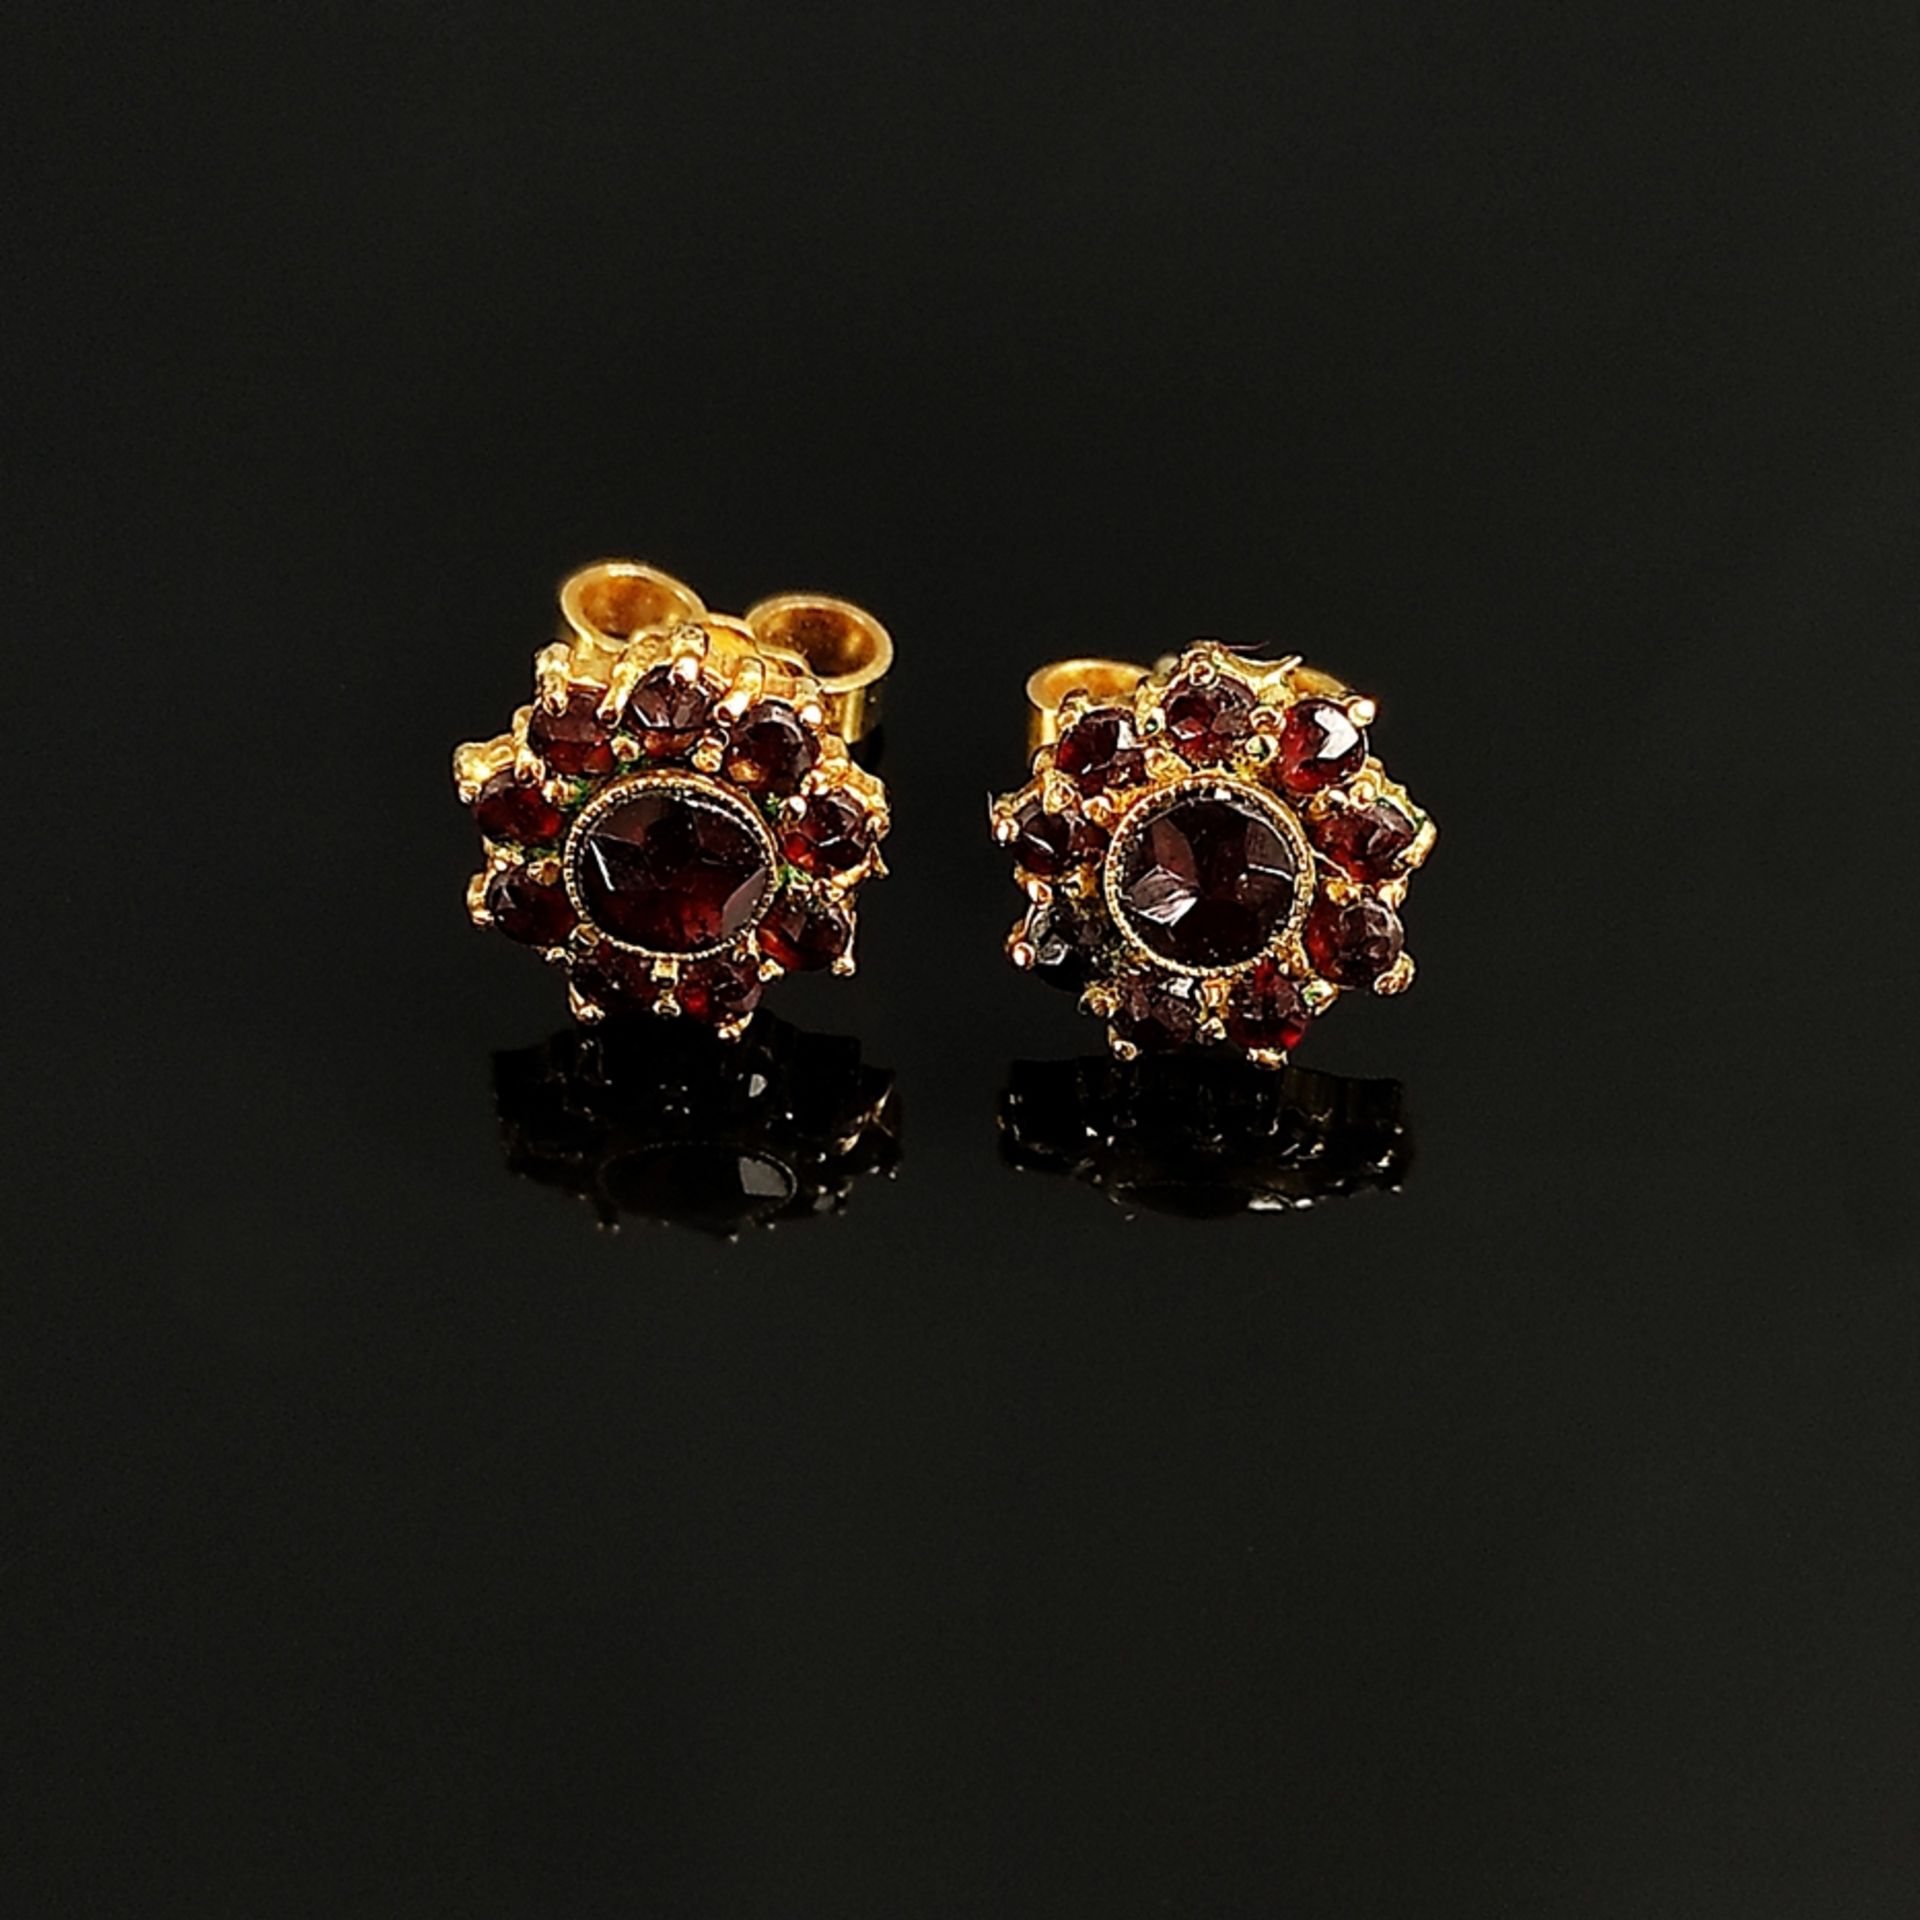 Antique garnet gold earrings, standard gold (250/1000), so also hallmarked, stud earrings made in r